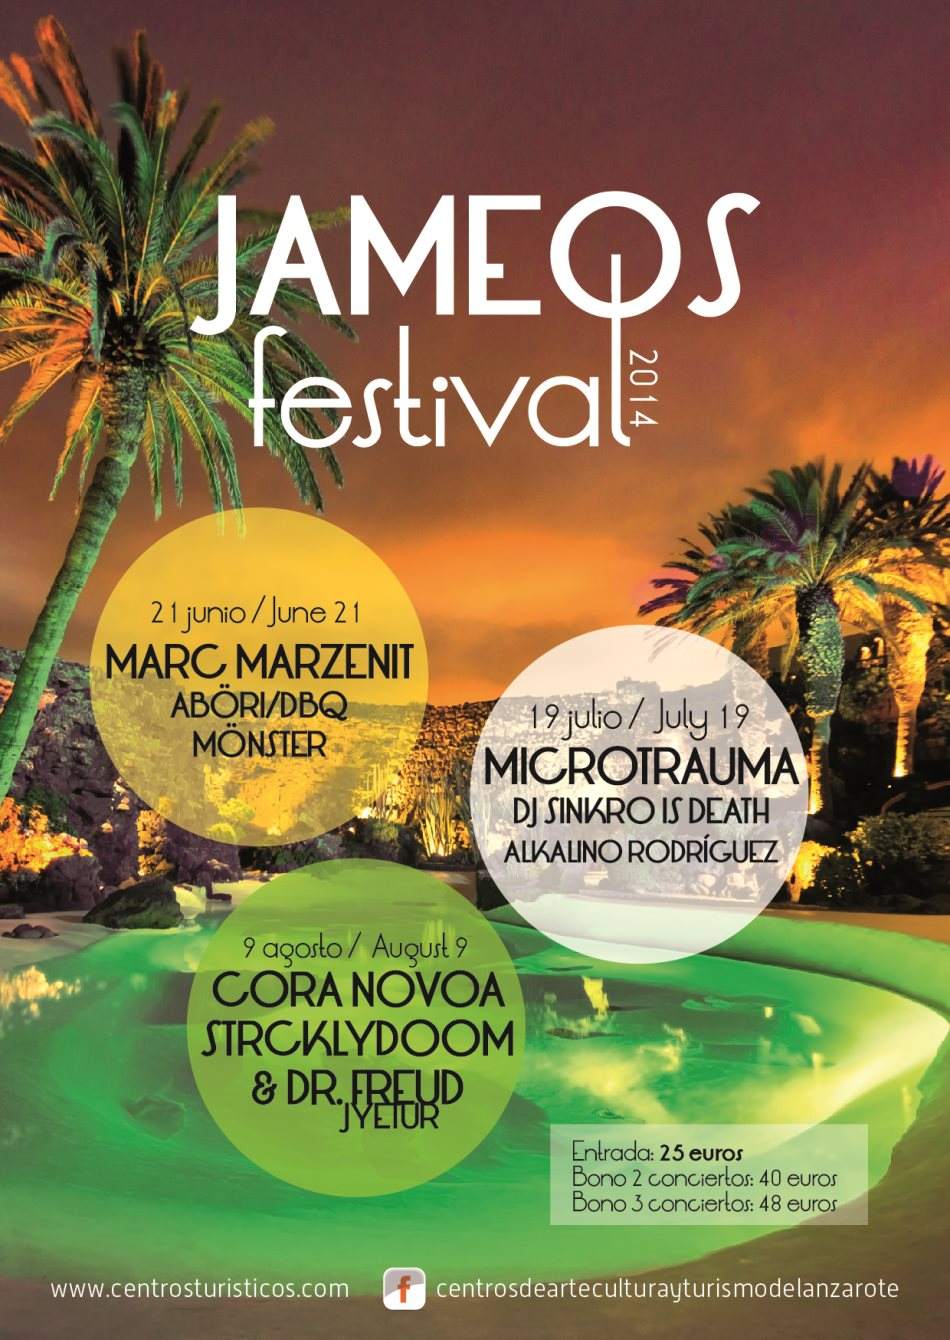 Jameos Festival 2014 - フライヤー表